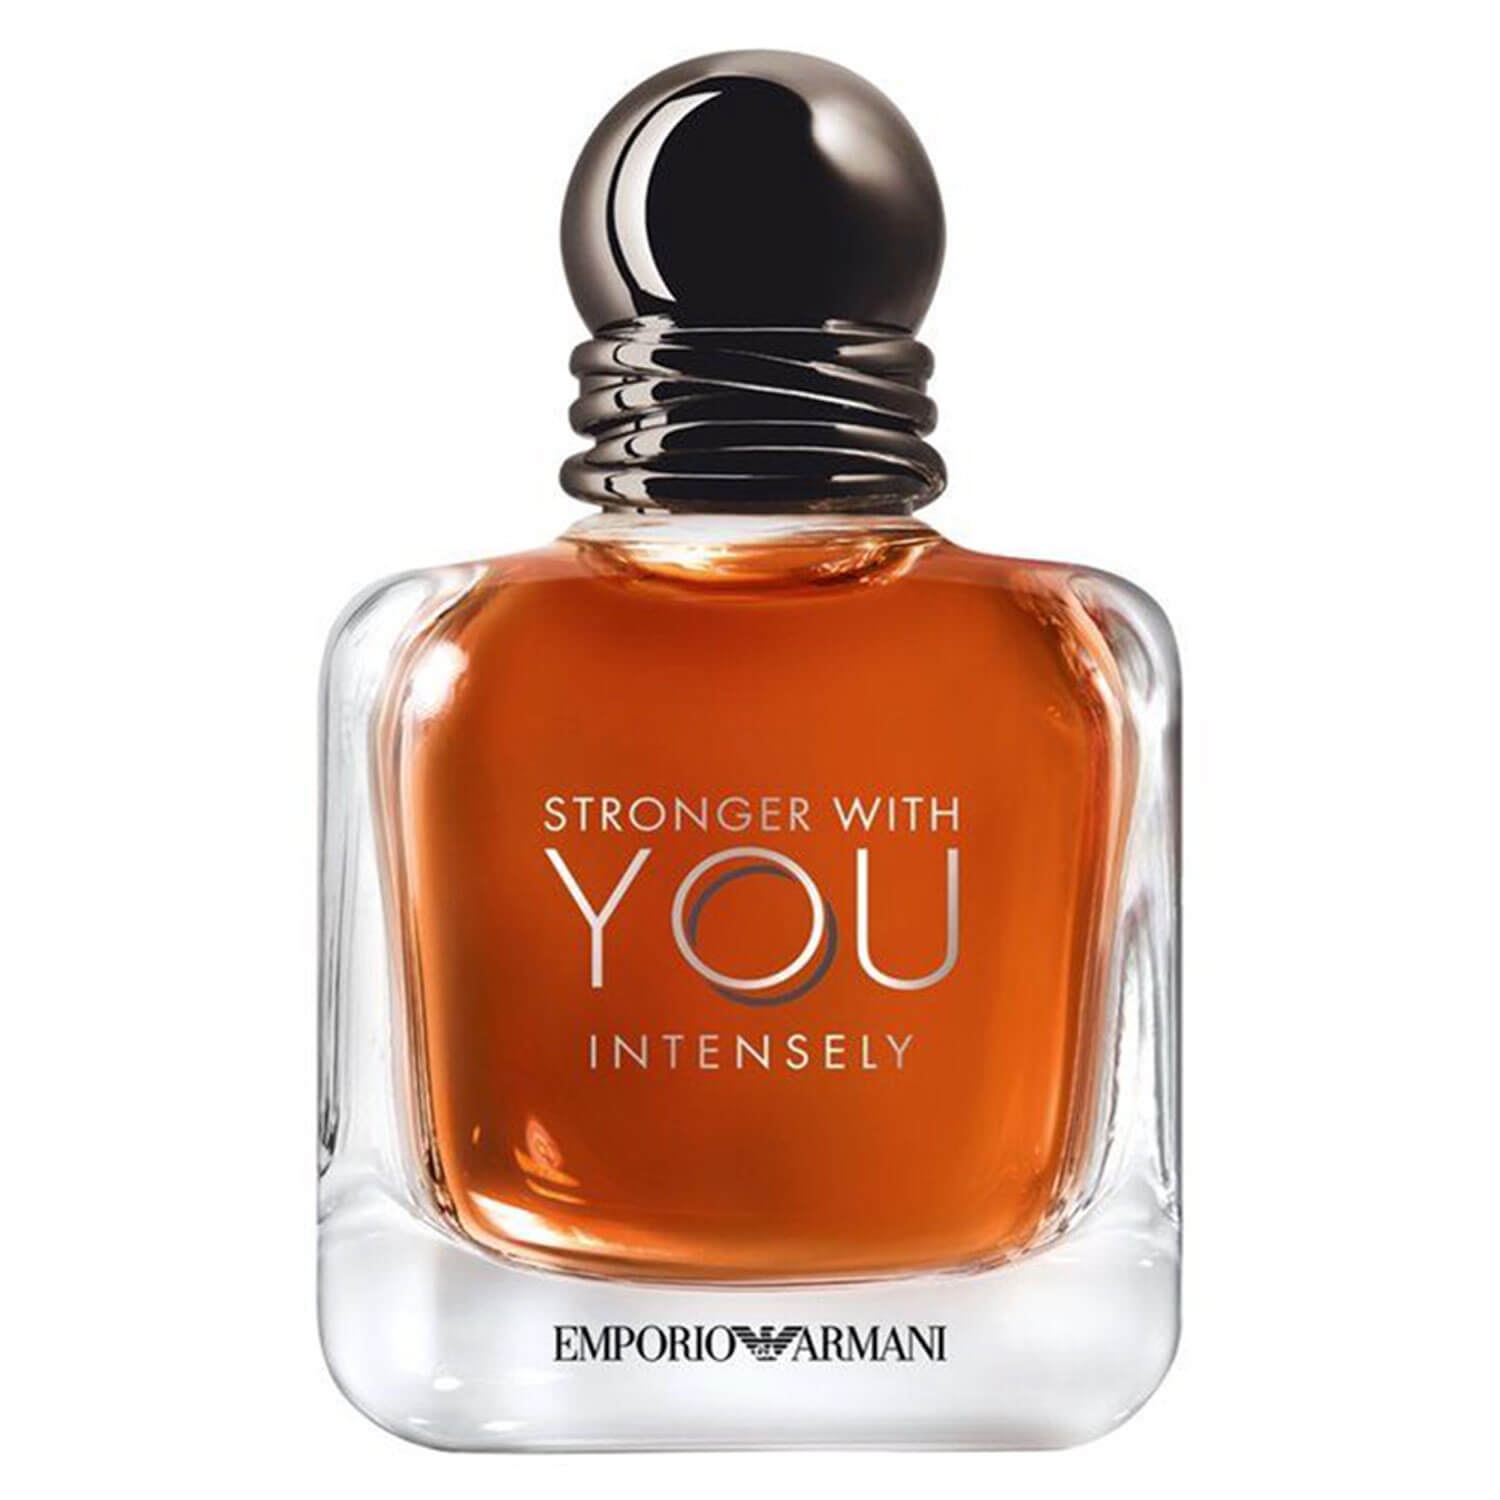 Produktbild von Emporio Armani - Stronger With You Intense Eau de Parfum